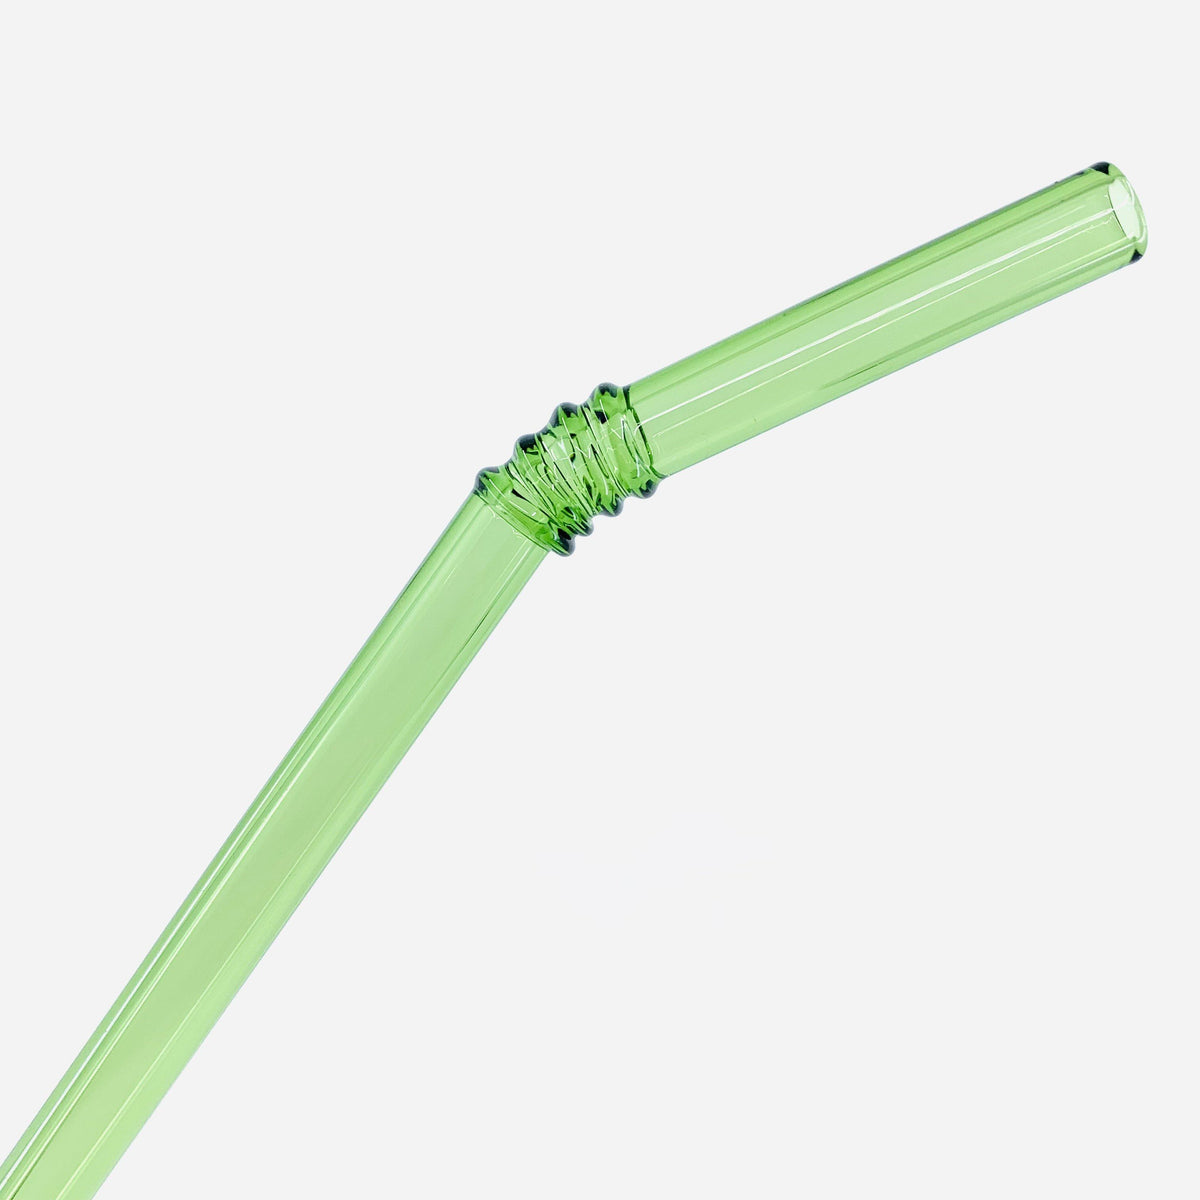 Green Glass Straw